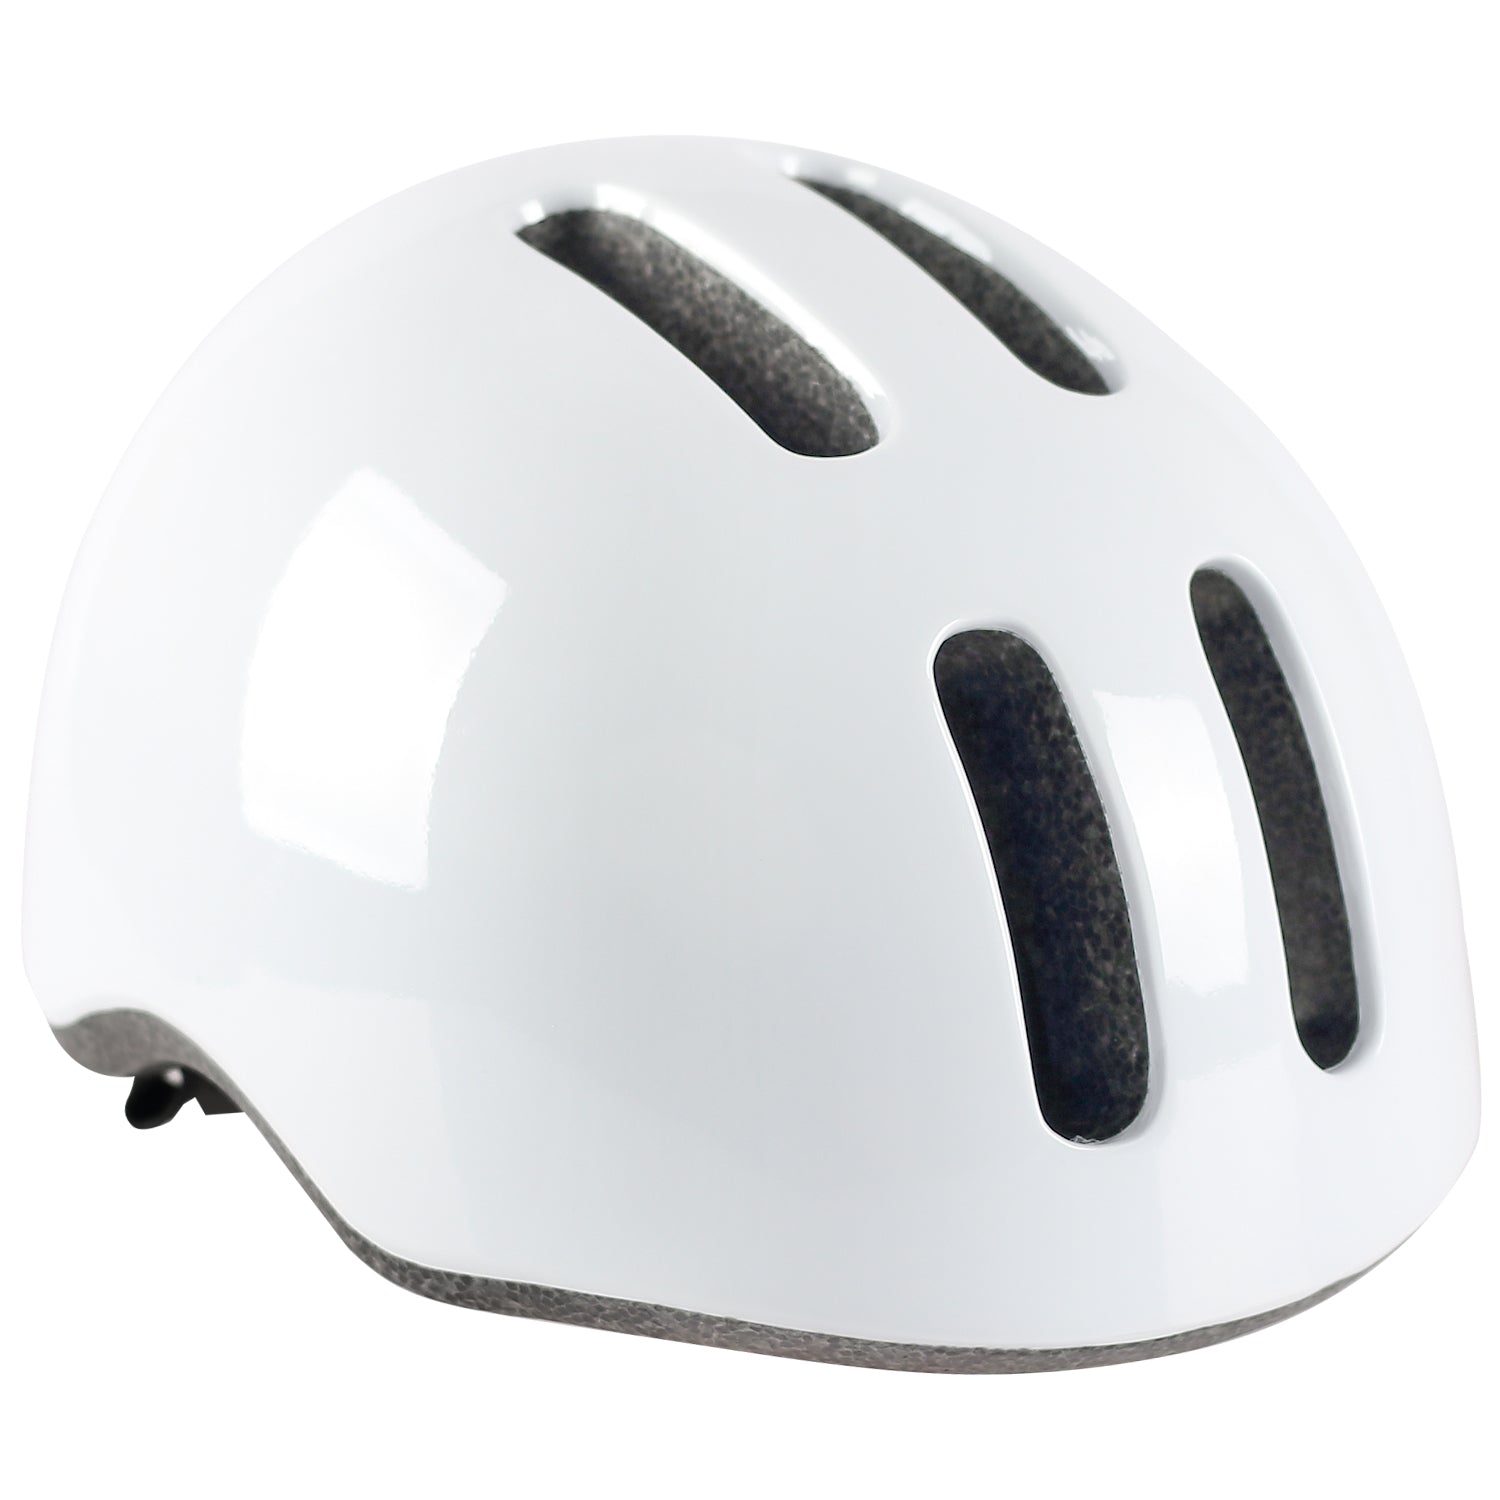 White Retro Helmet